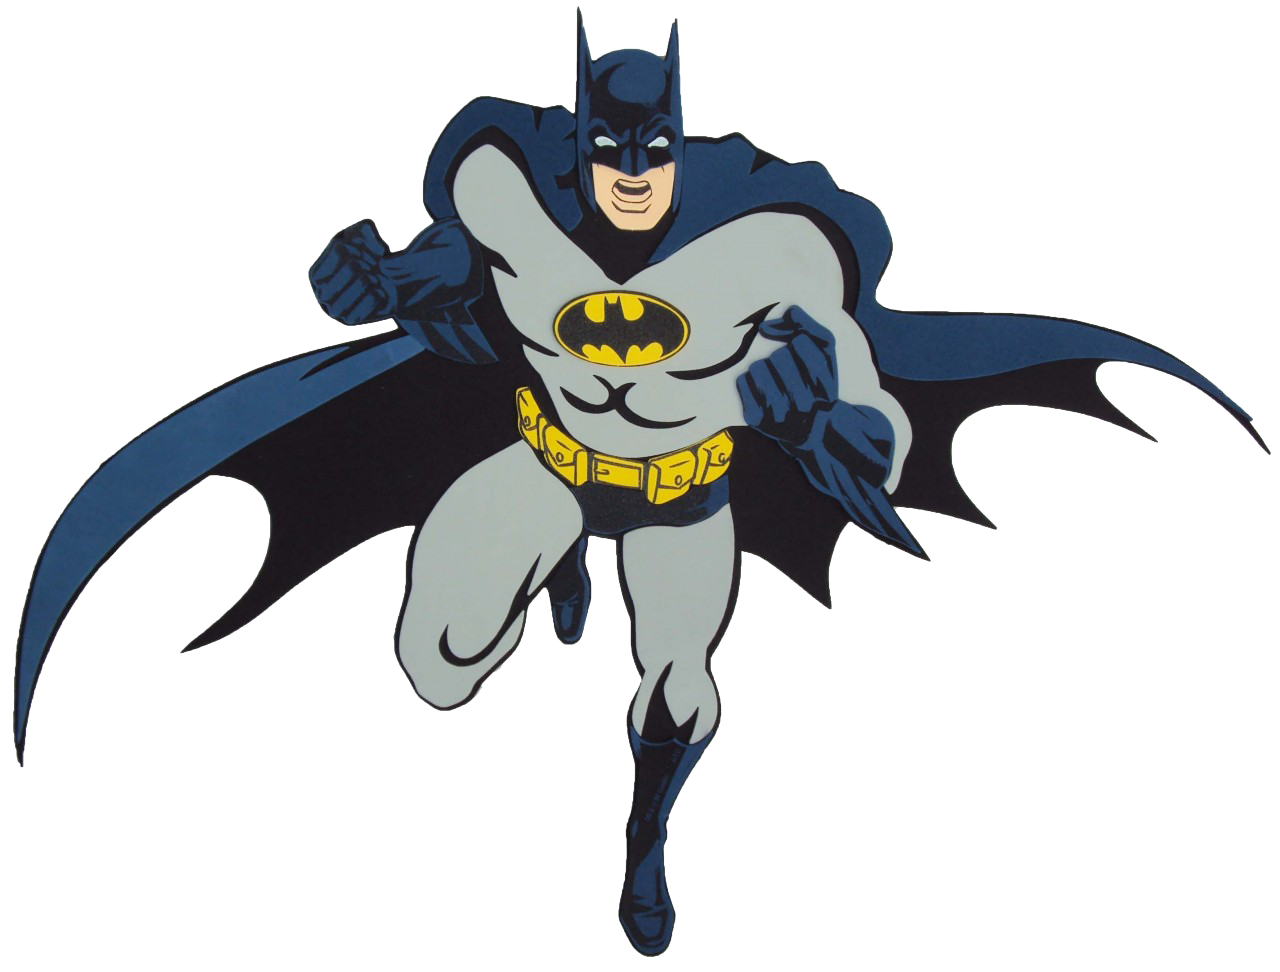 Batman Diana Prince Art Joker - firefly png download - 1280*972 - Free